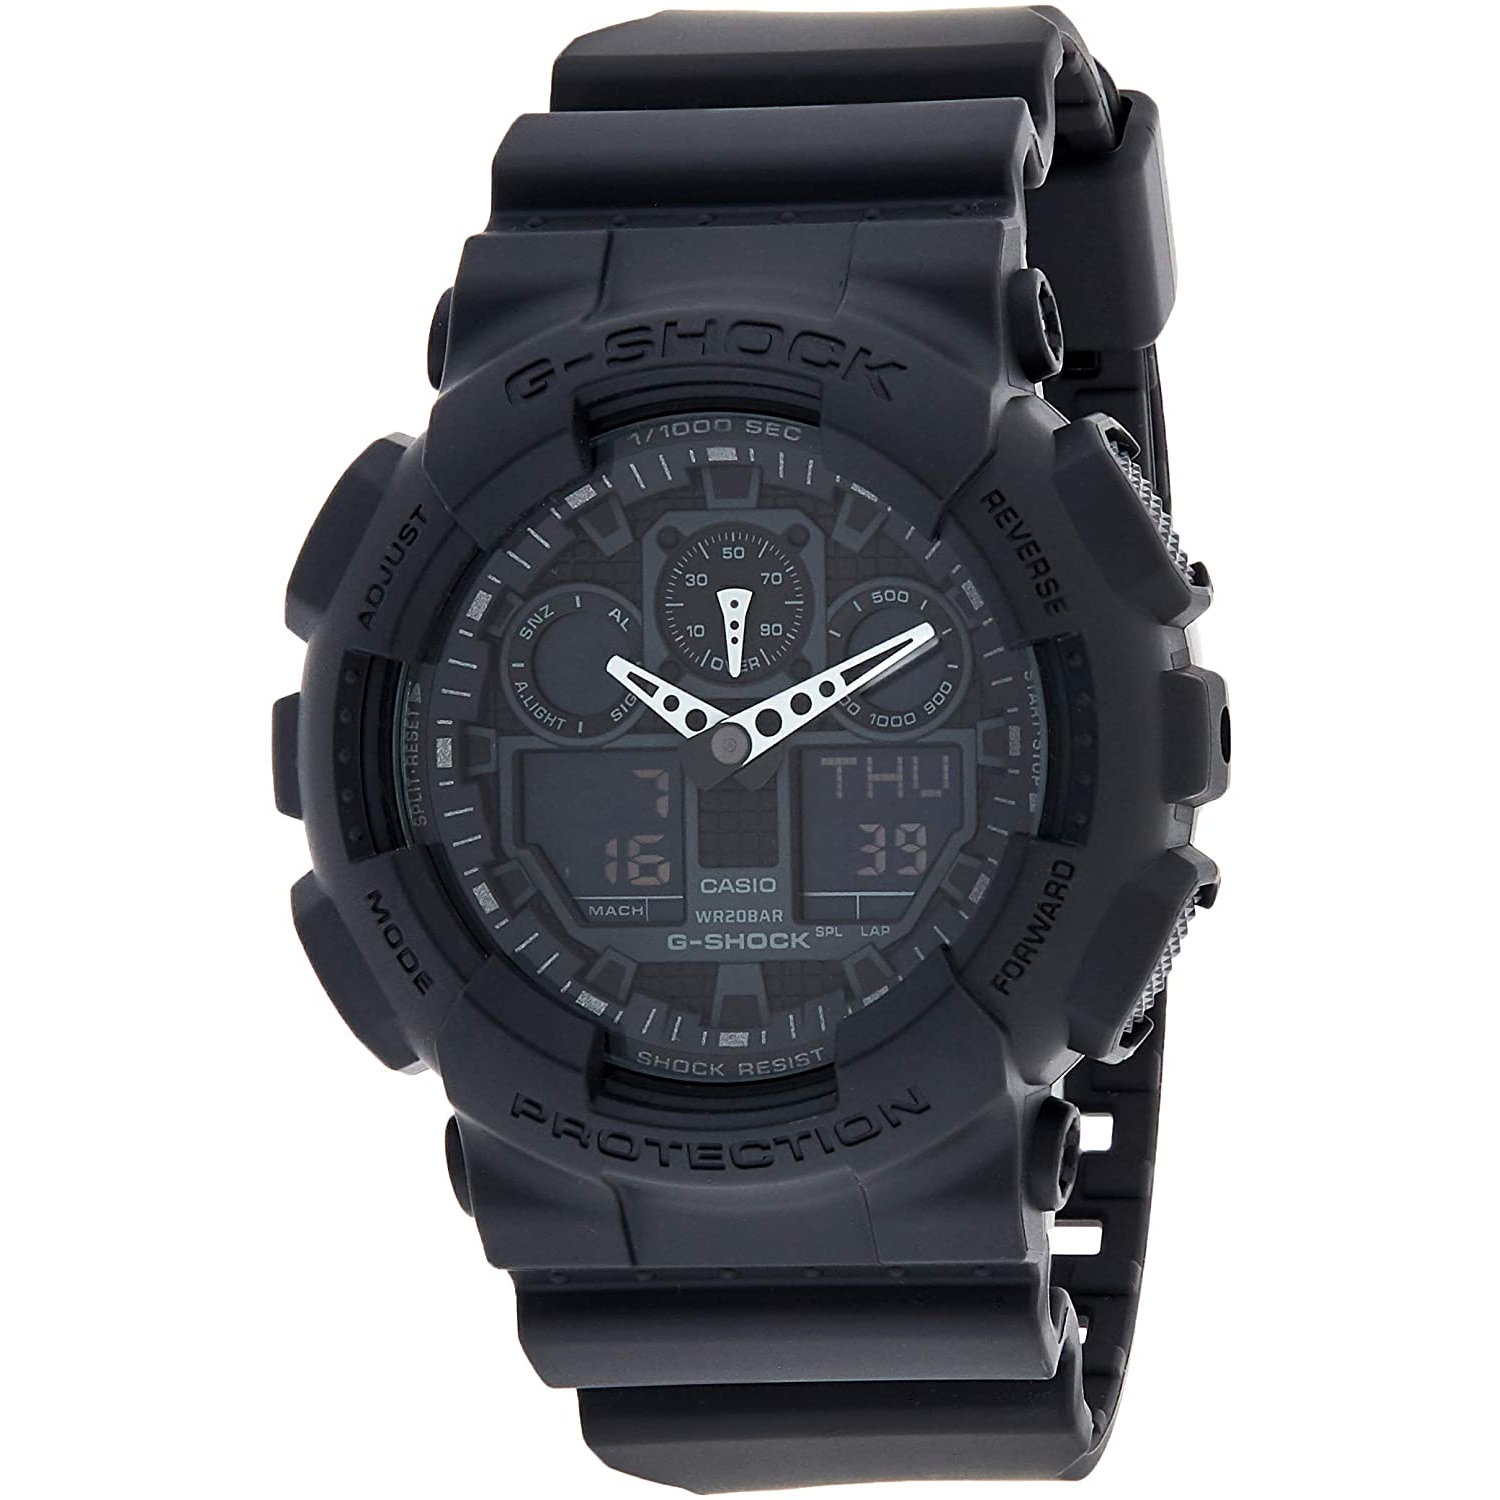 Casio Men's G-Shock Black Dial Watch - GA100-1A1 - image 1 of 3